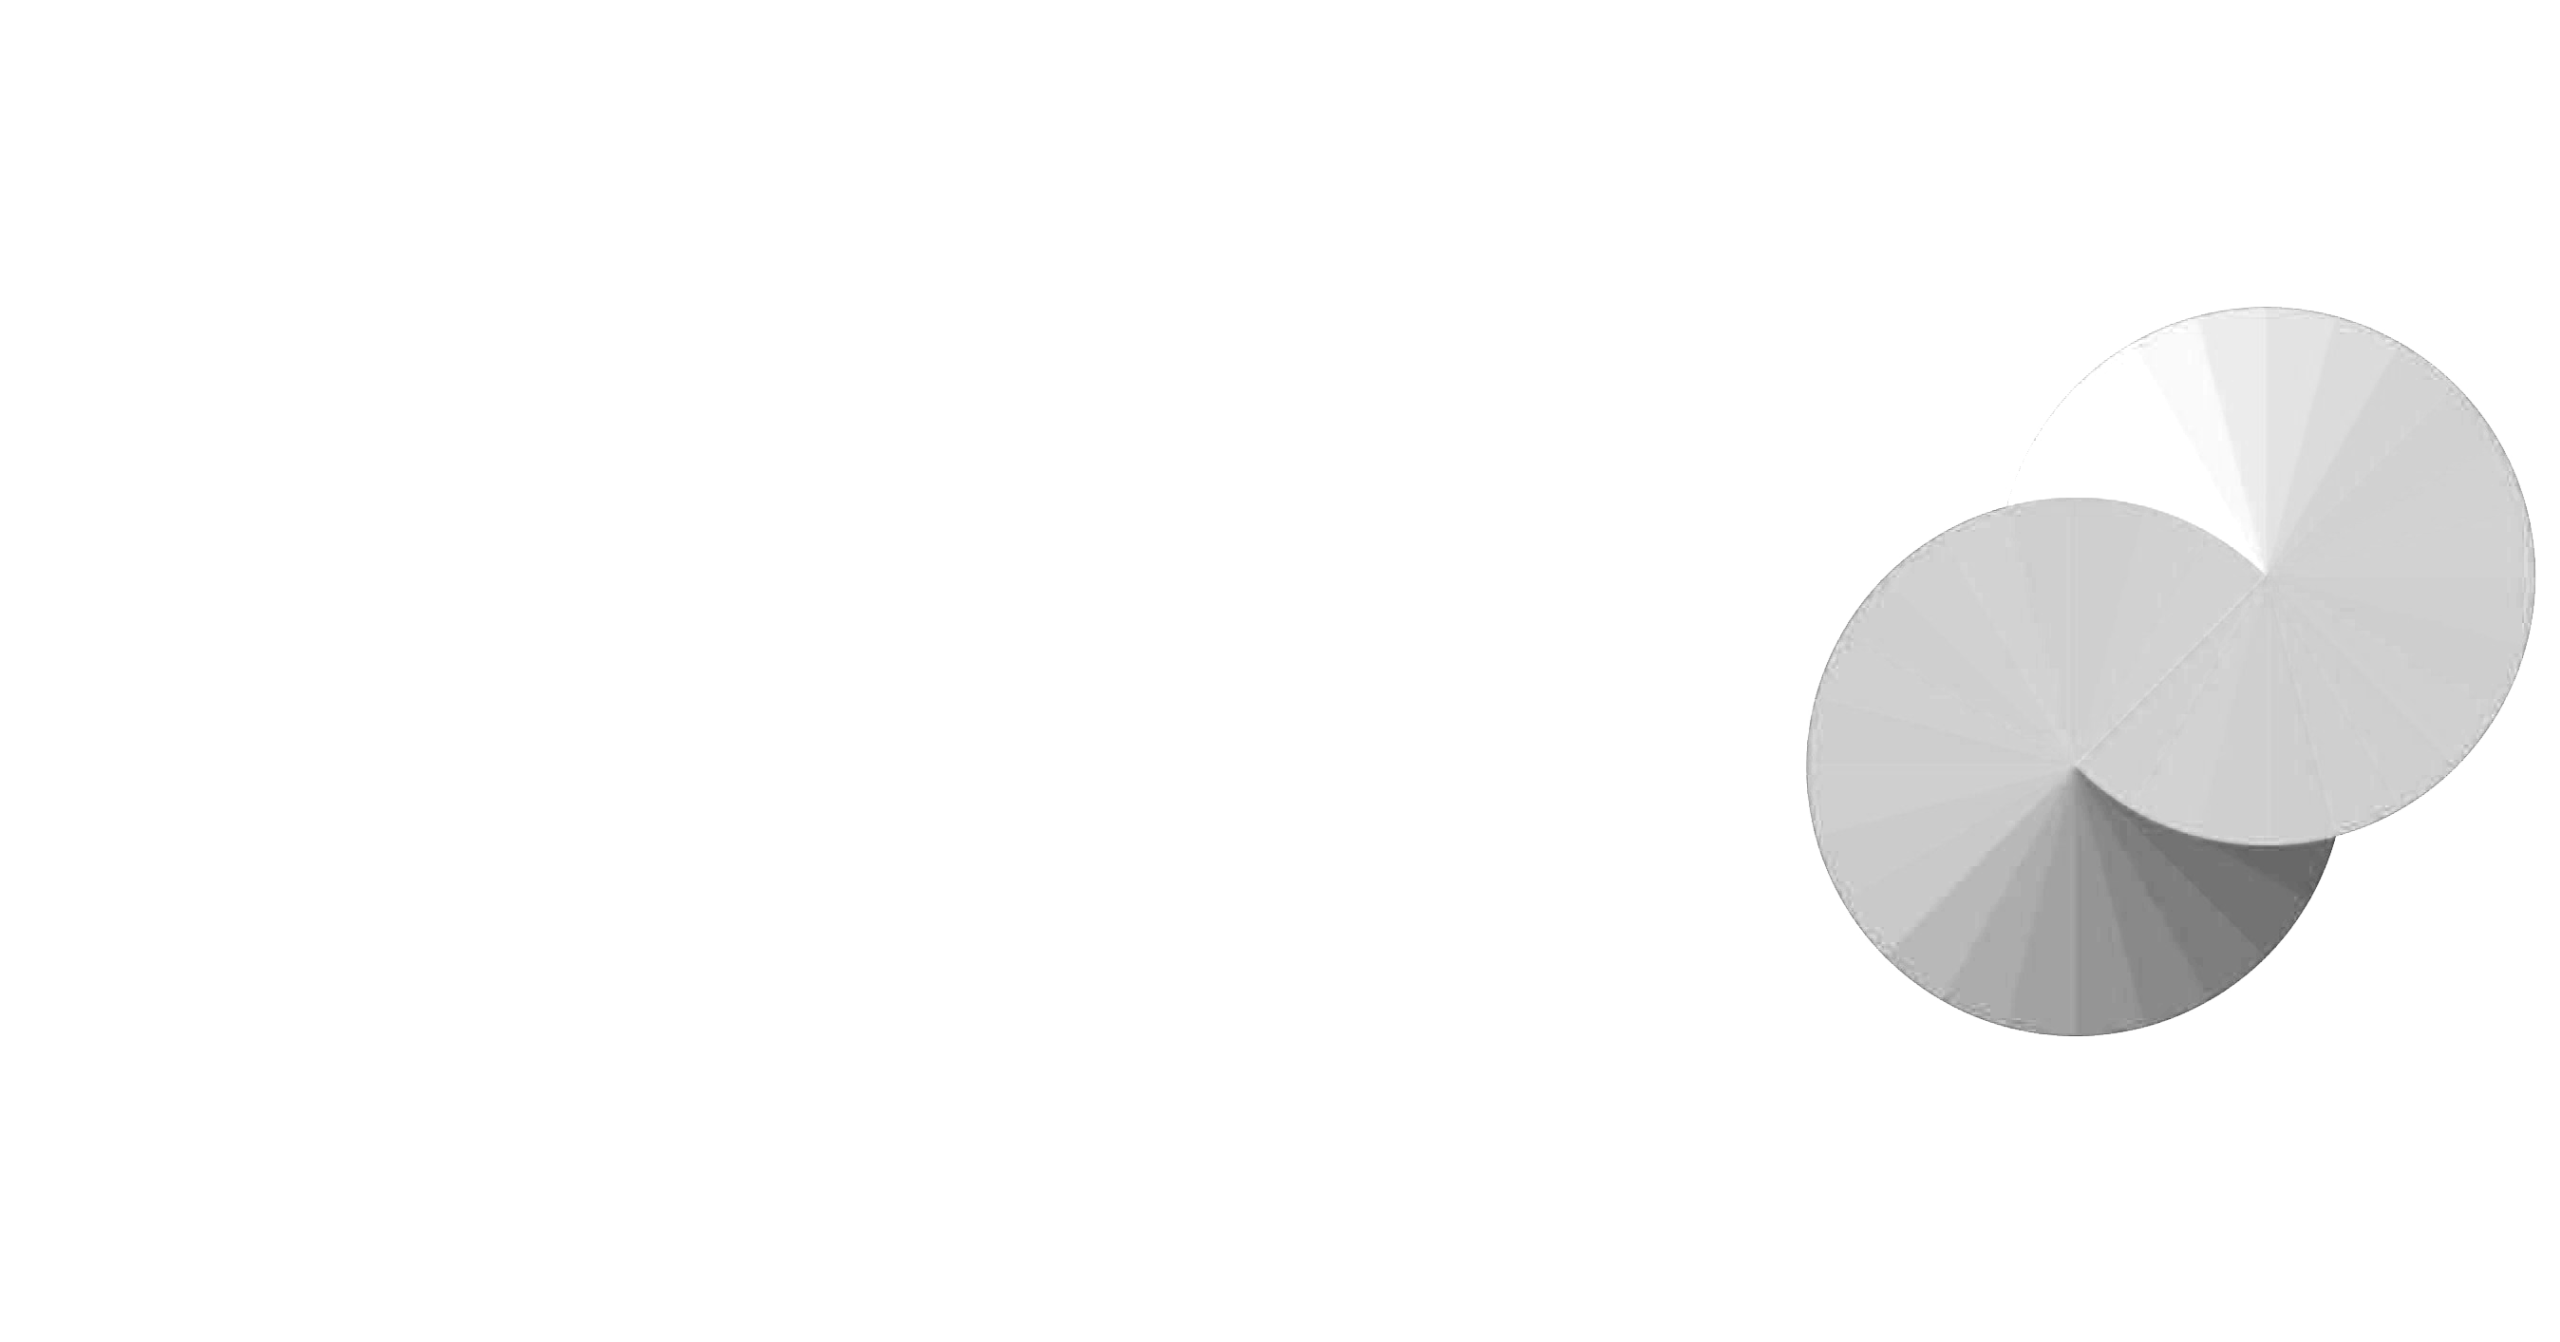 Mindshare logo 